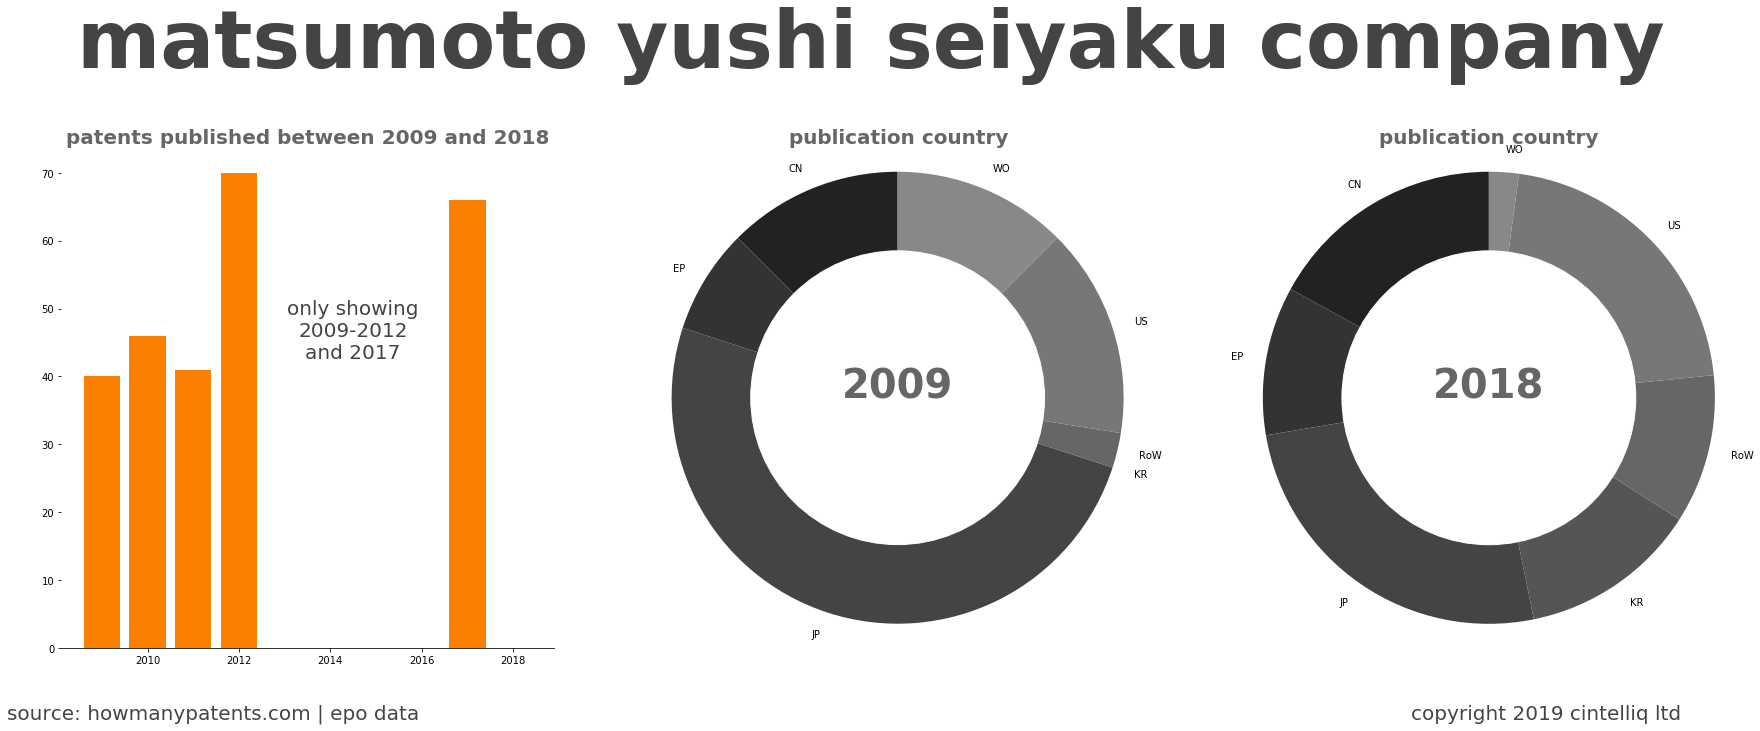 summary of patents for Matsumoto Yushi Seiyaku Company